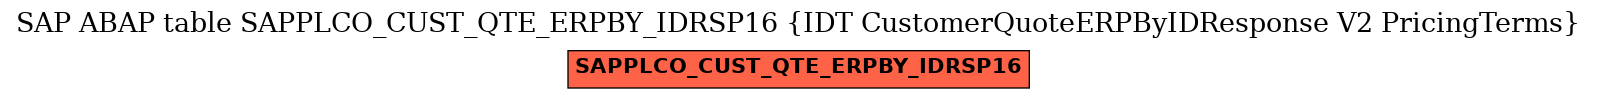 E-R Diagram for table SAPPLCO_CUST_QTE_ERPBY_IDRSP16 (IDT CustomerQuoteERPByIDResponse V2 PricingTerms)